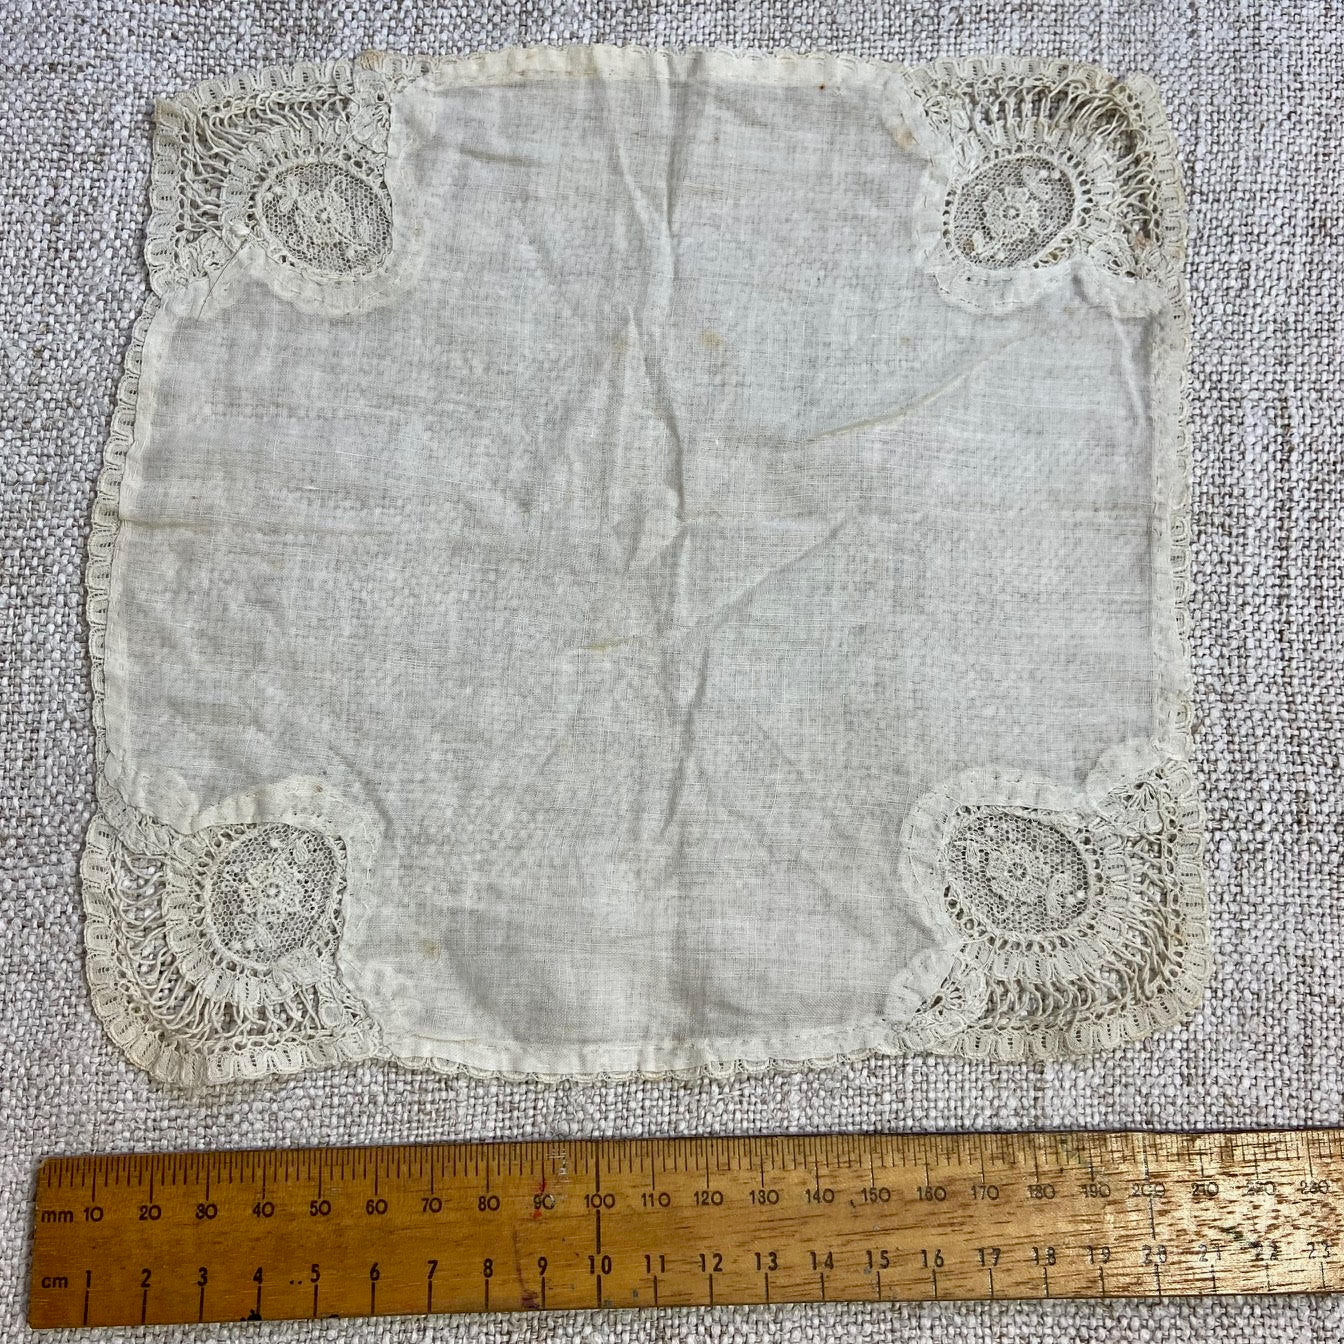 Handkerchief - Item 23550